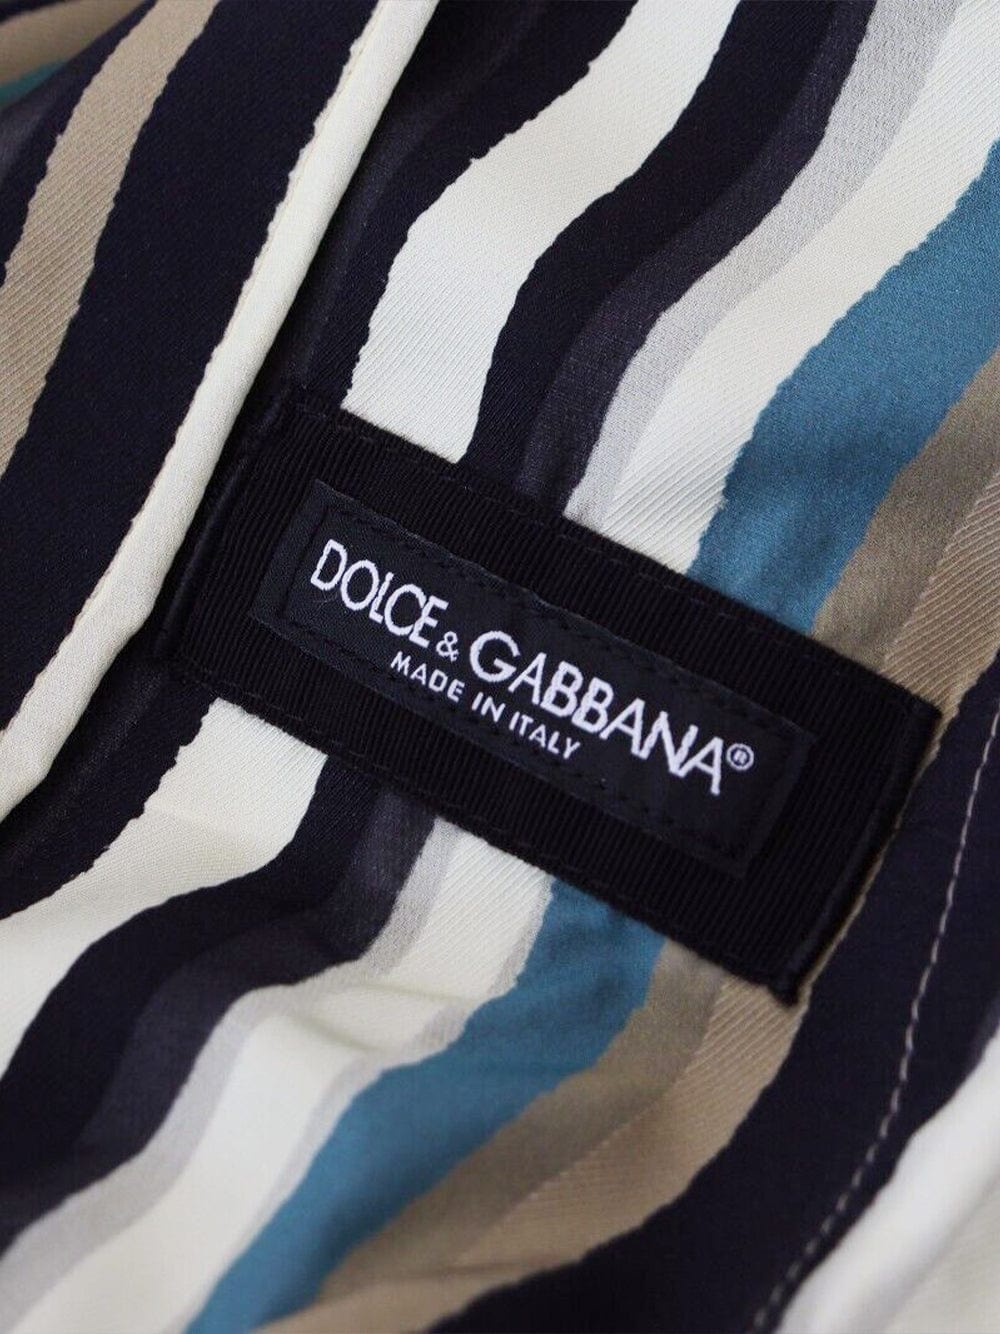 Dolce & Gabbana Multicolor Striped Bomber Jacket